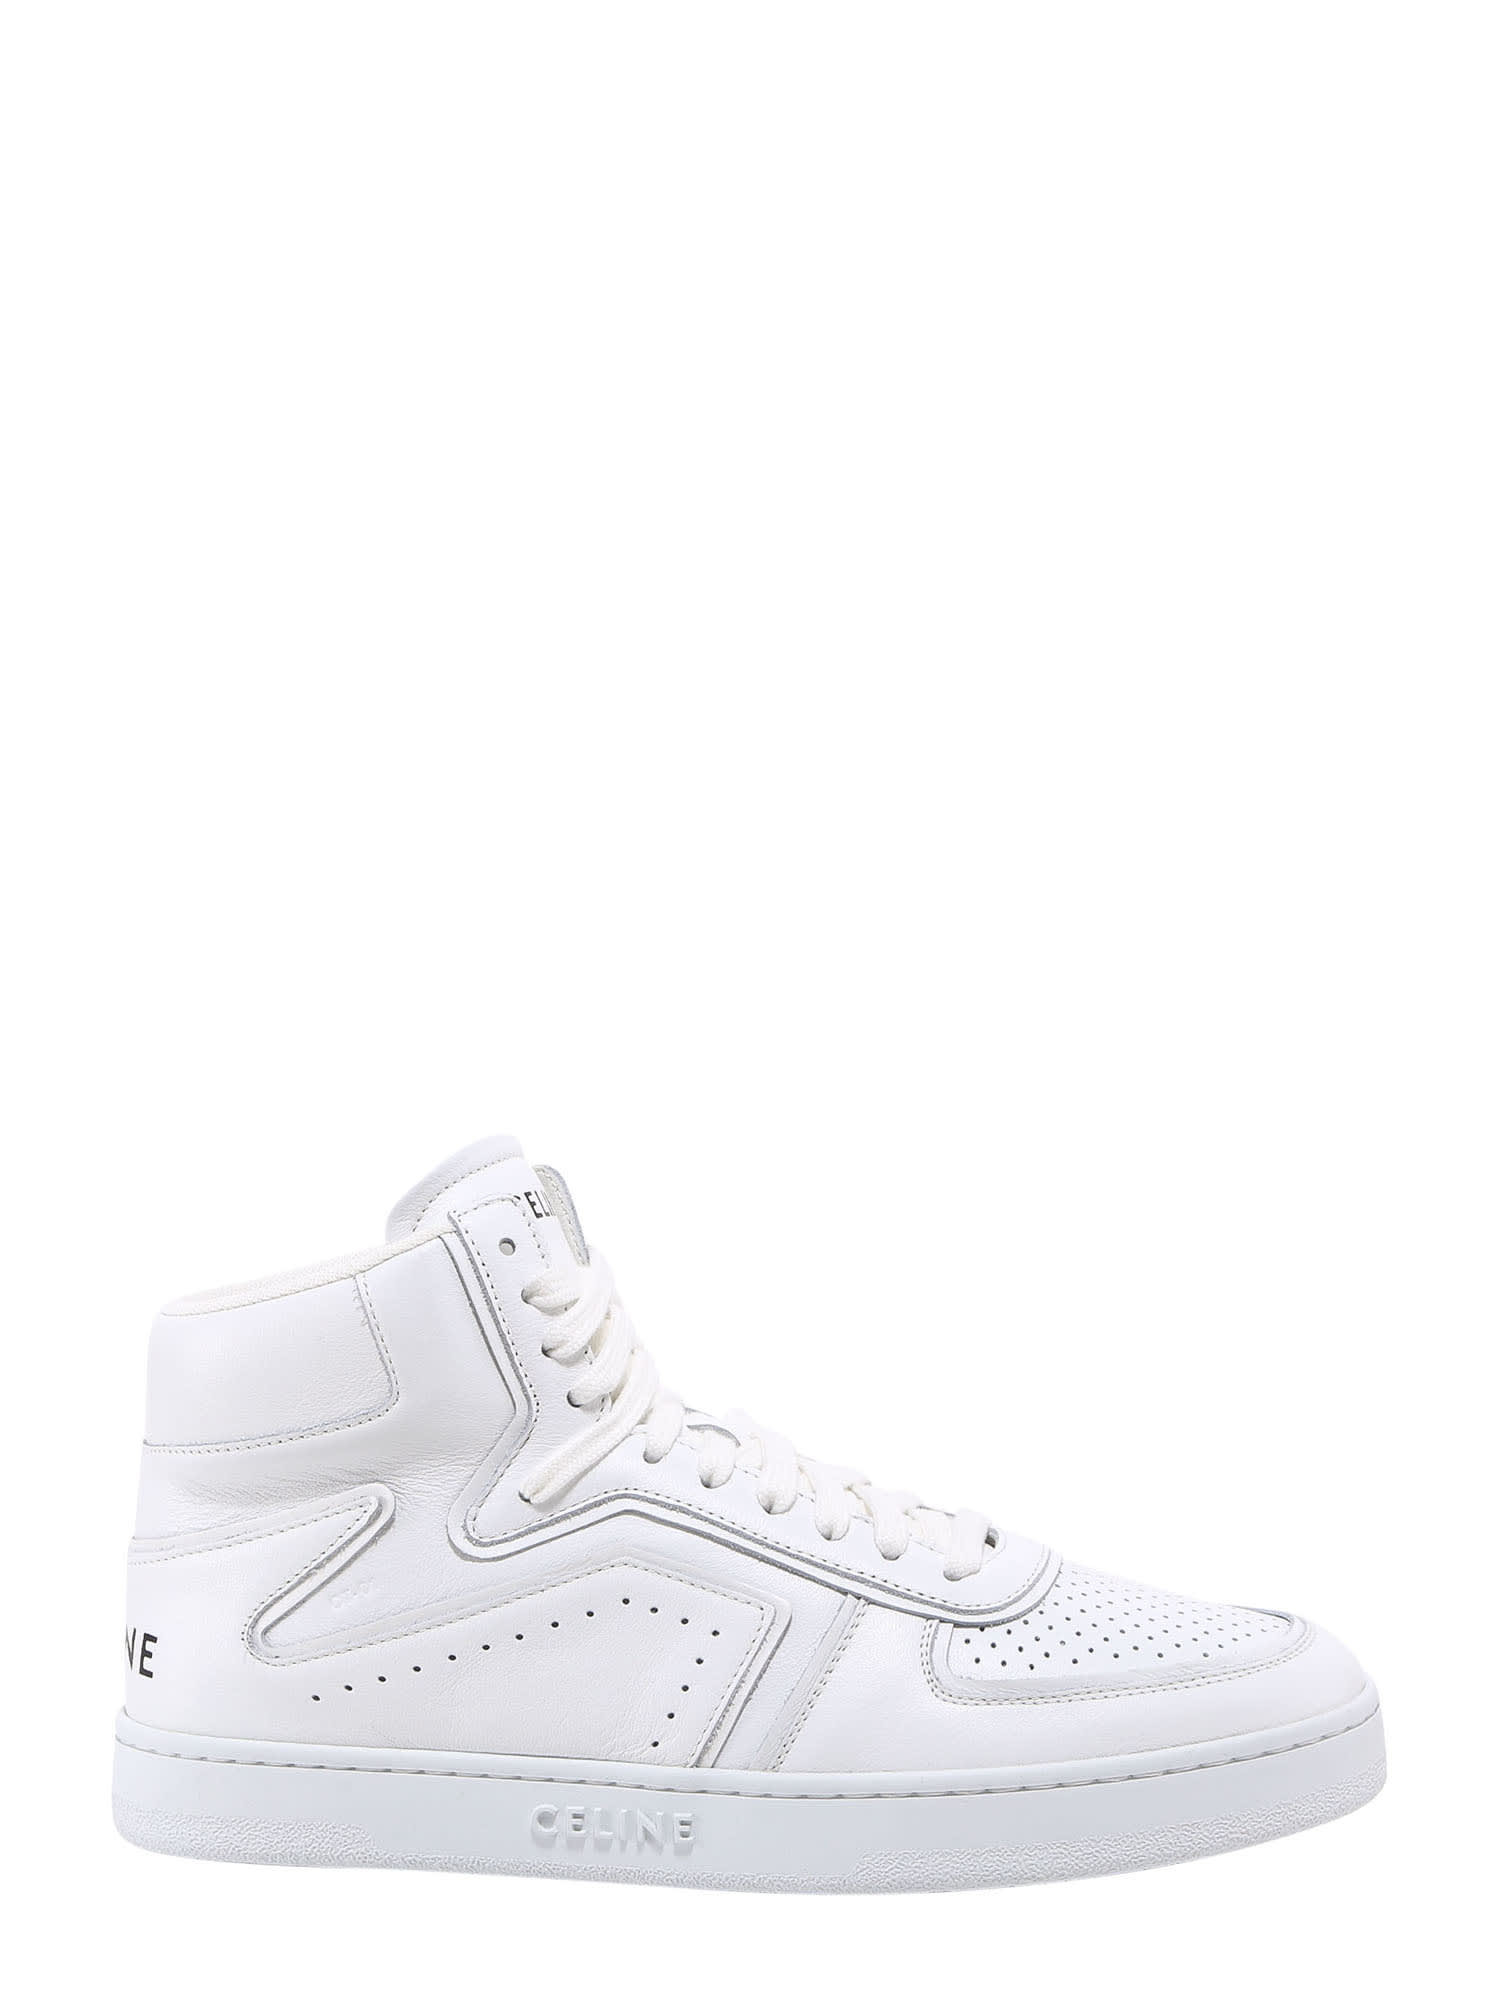 Celine Sneakers In White | ModeSens